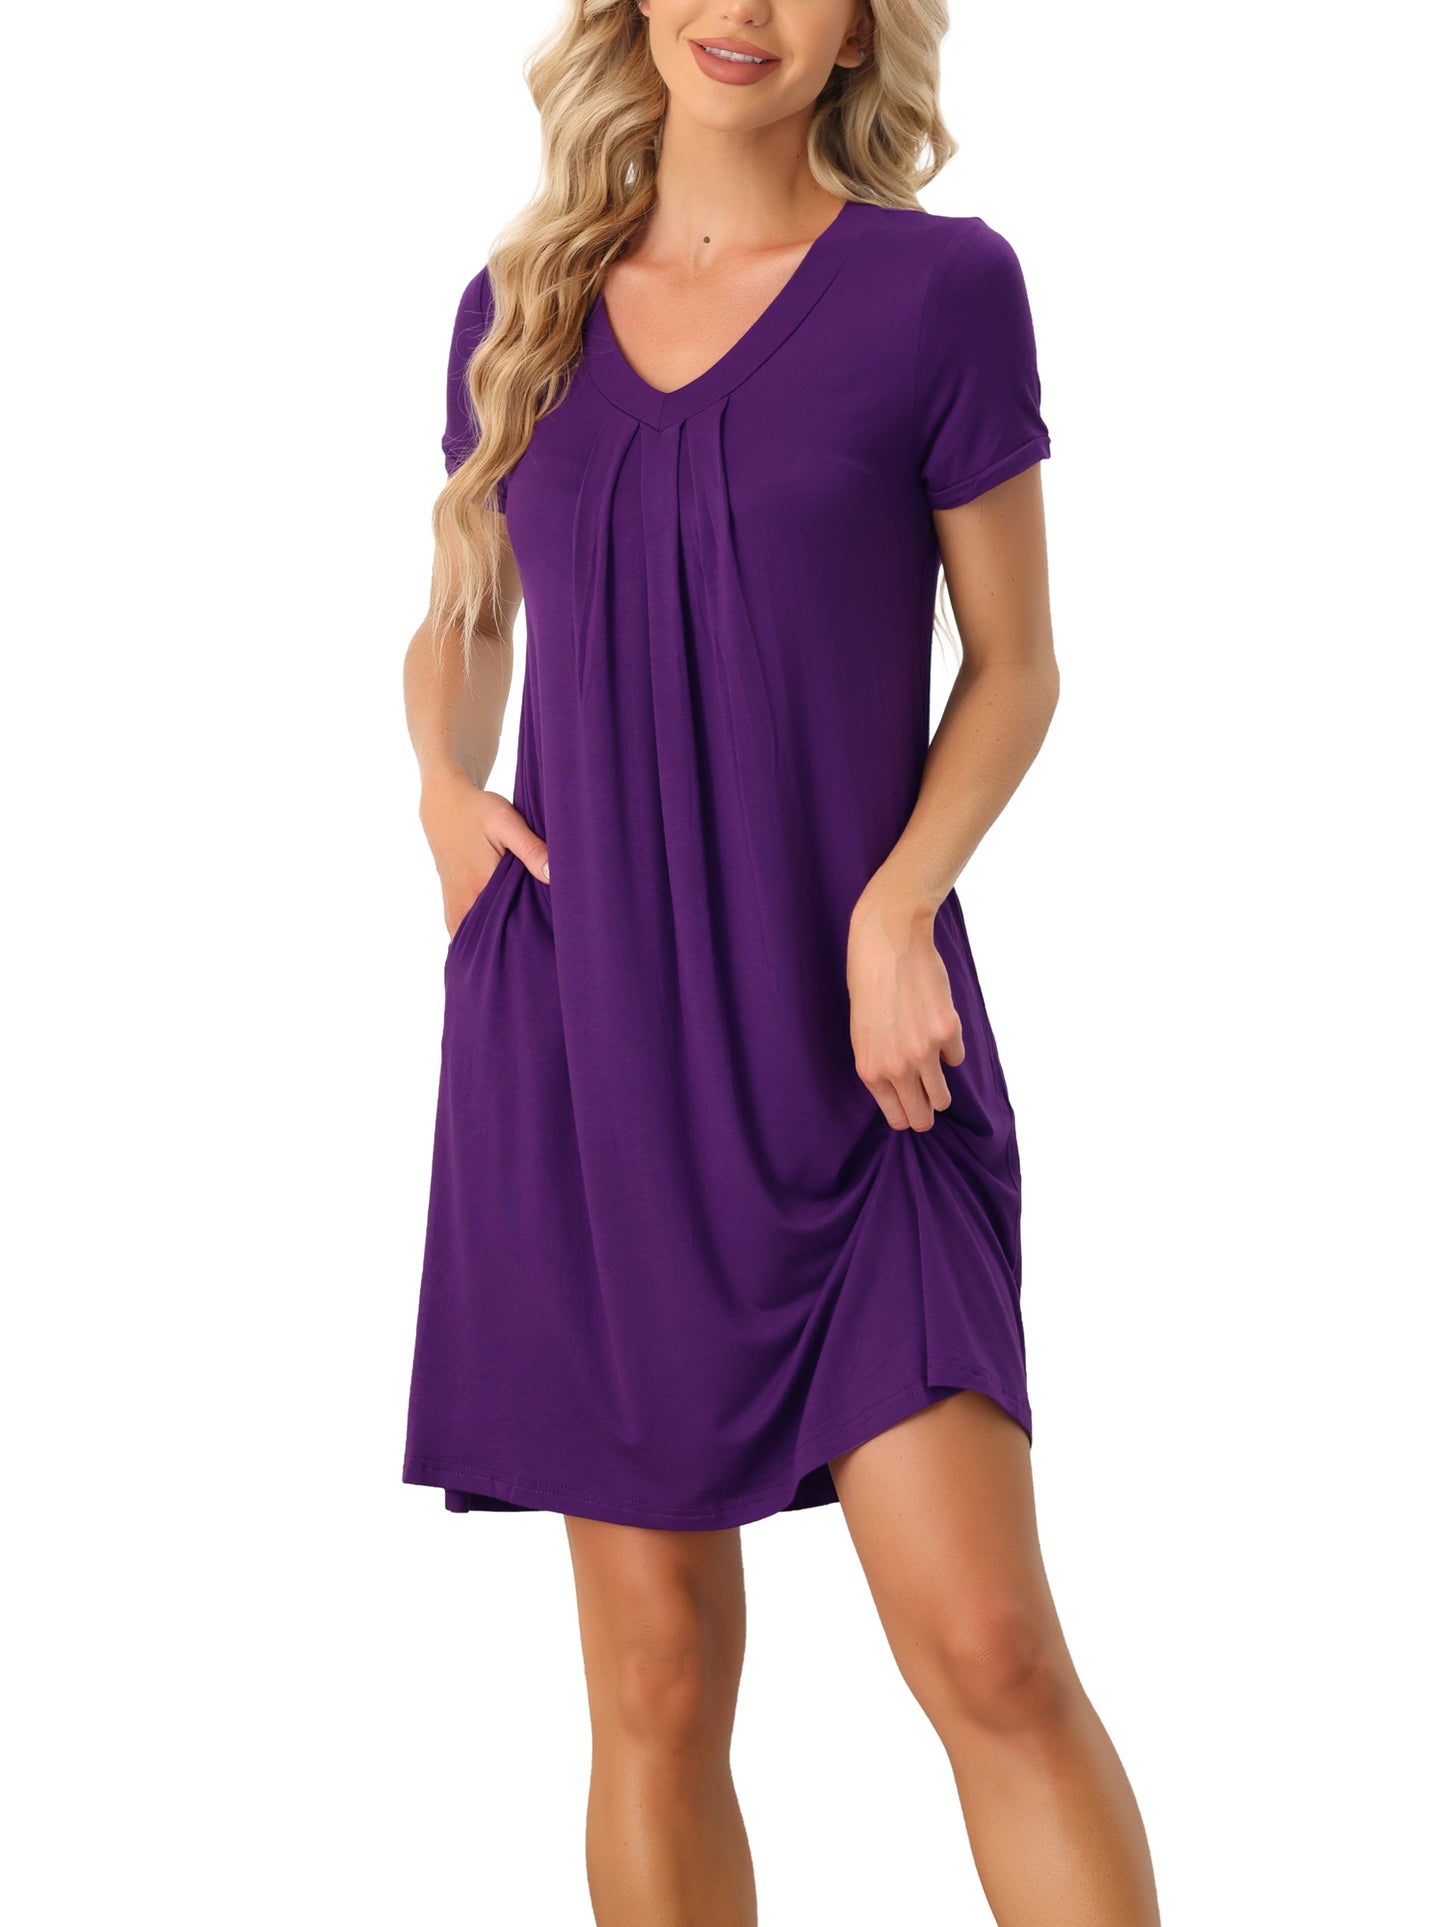 cheibear Pajama Dress Nightshirt Sleepwear V-Neck with Pockets Lounge Nightgown Dark Purple